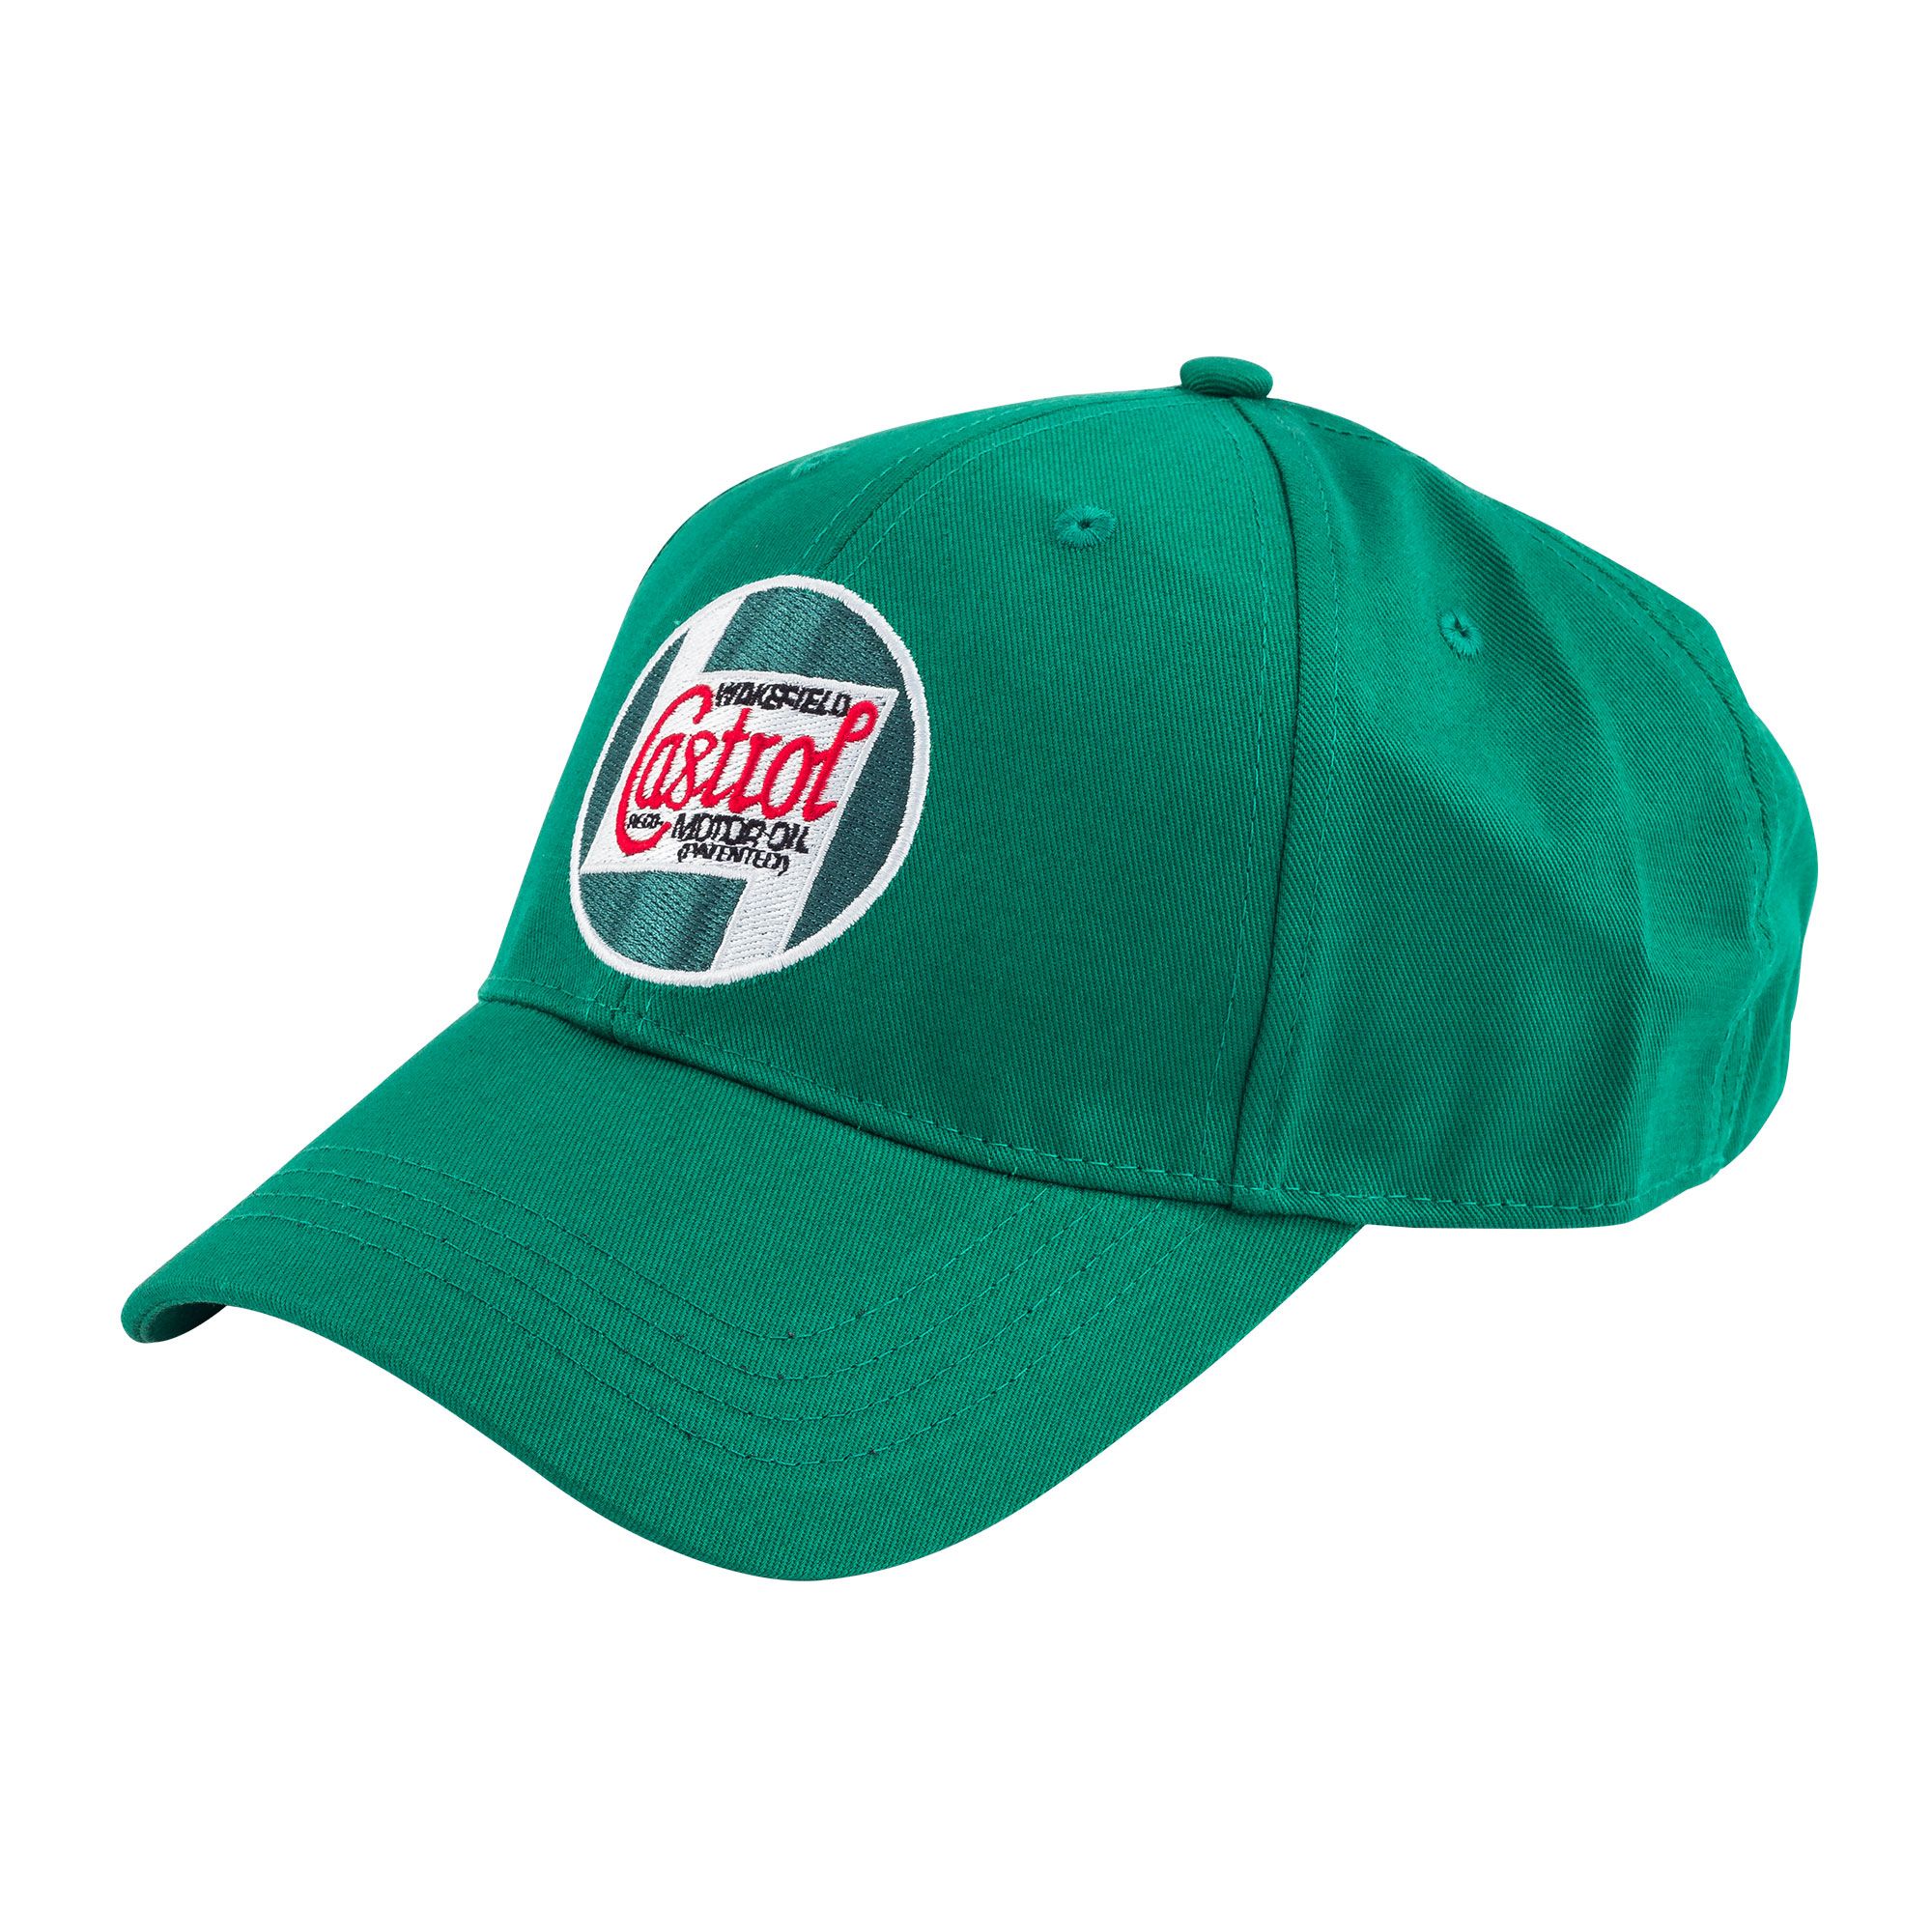 Castrol Classic Oil Logo Baseball Base Ball Driving Peak/Peaked Cap/Hat ...